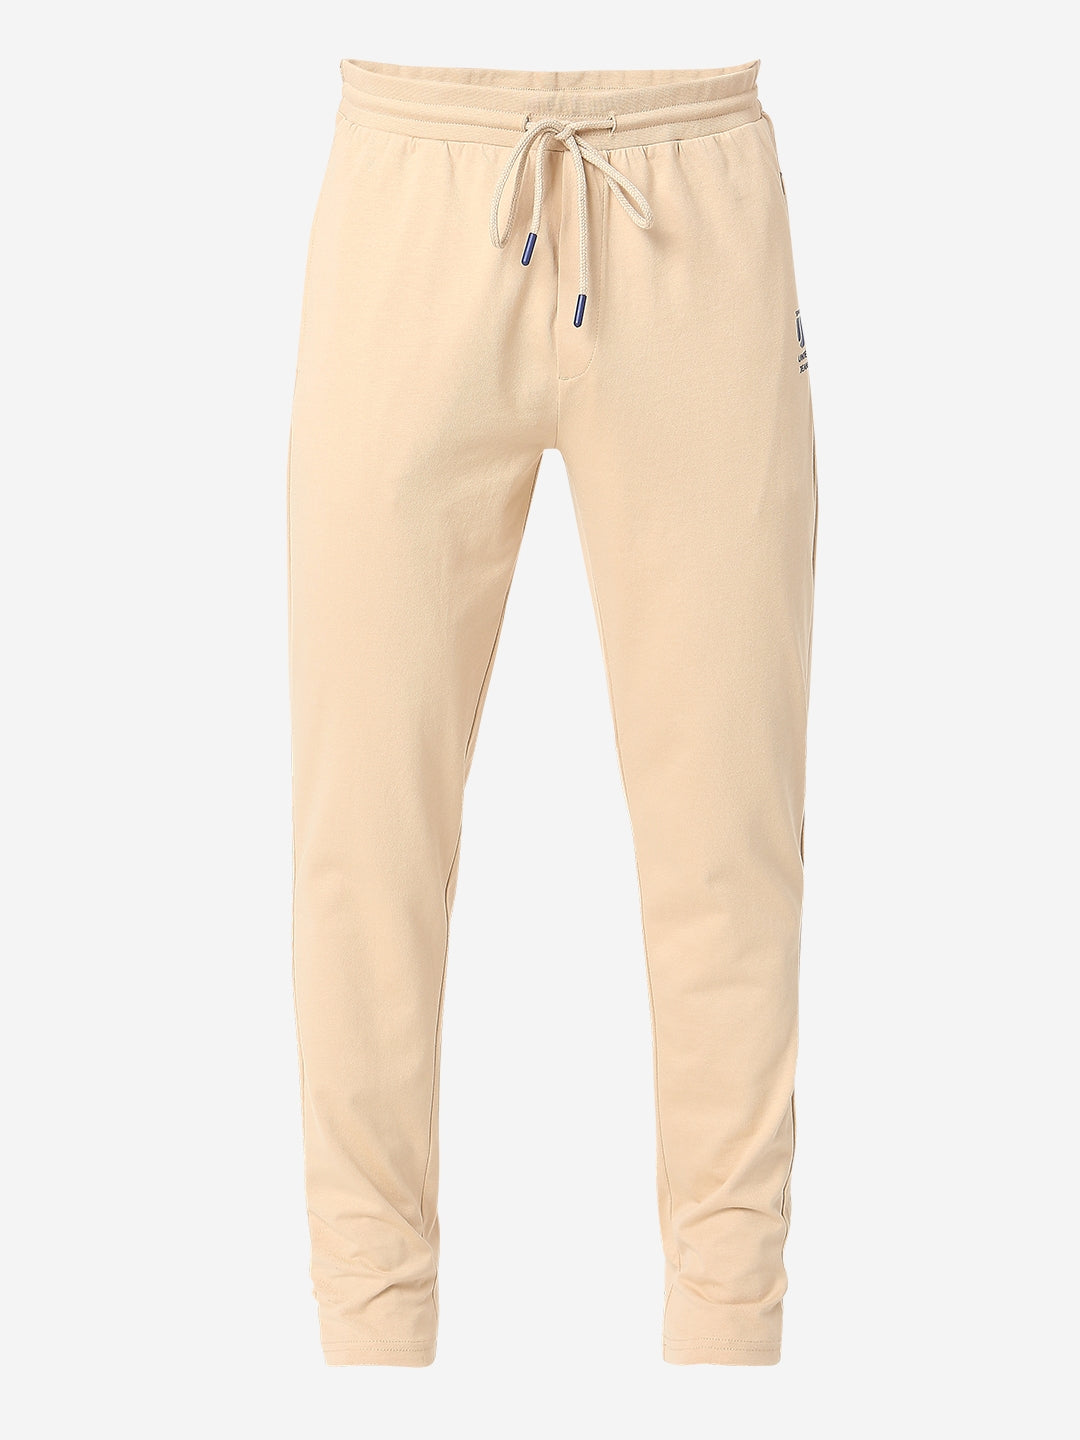 Underjeans by Spykar Men Premium Cotton Beige Pyjama